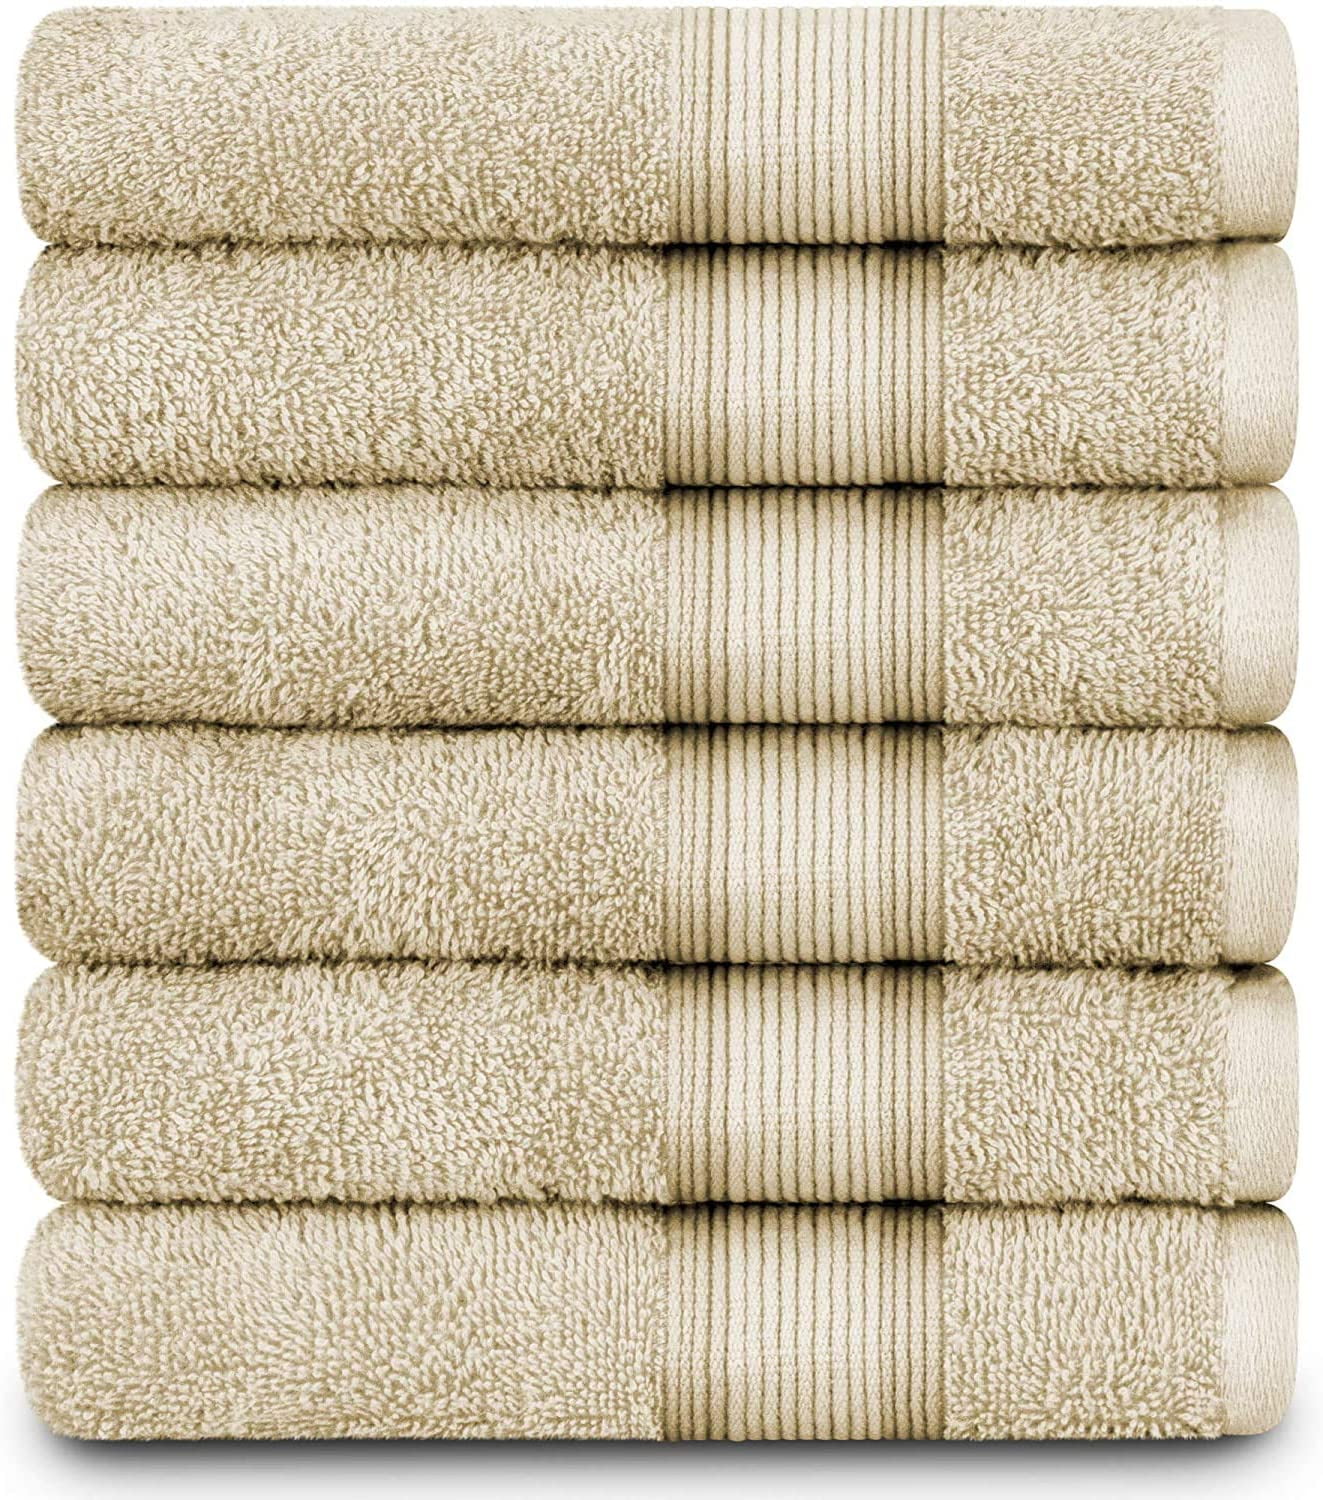 Cotton Large Hand Towels Multipurpose Bath Gym Spa Dark Beige 4 Pack 16"x28" 